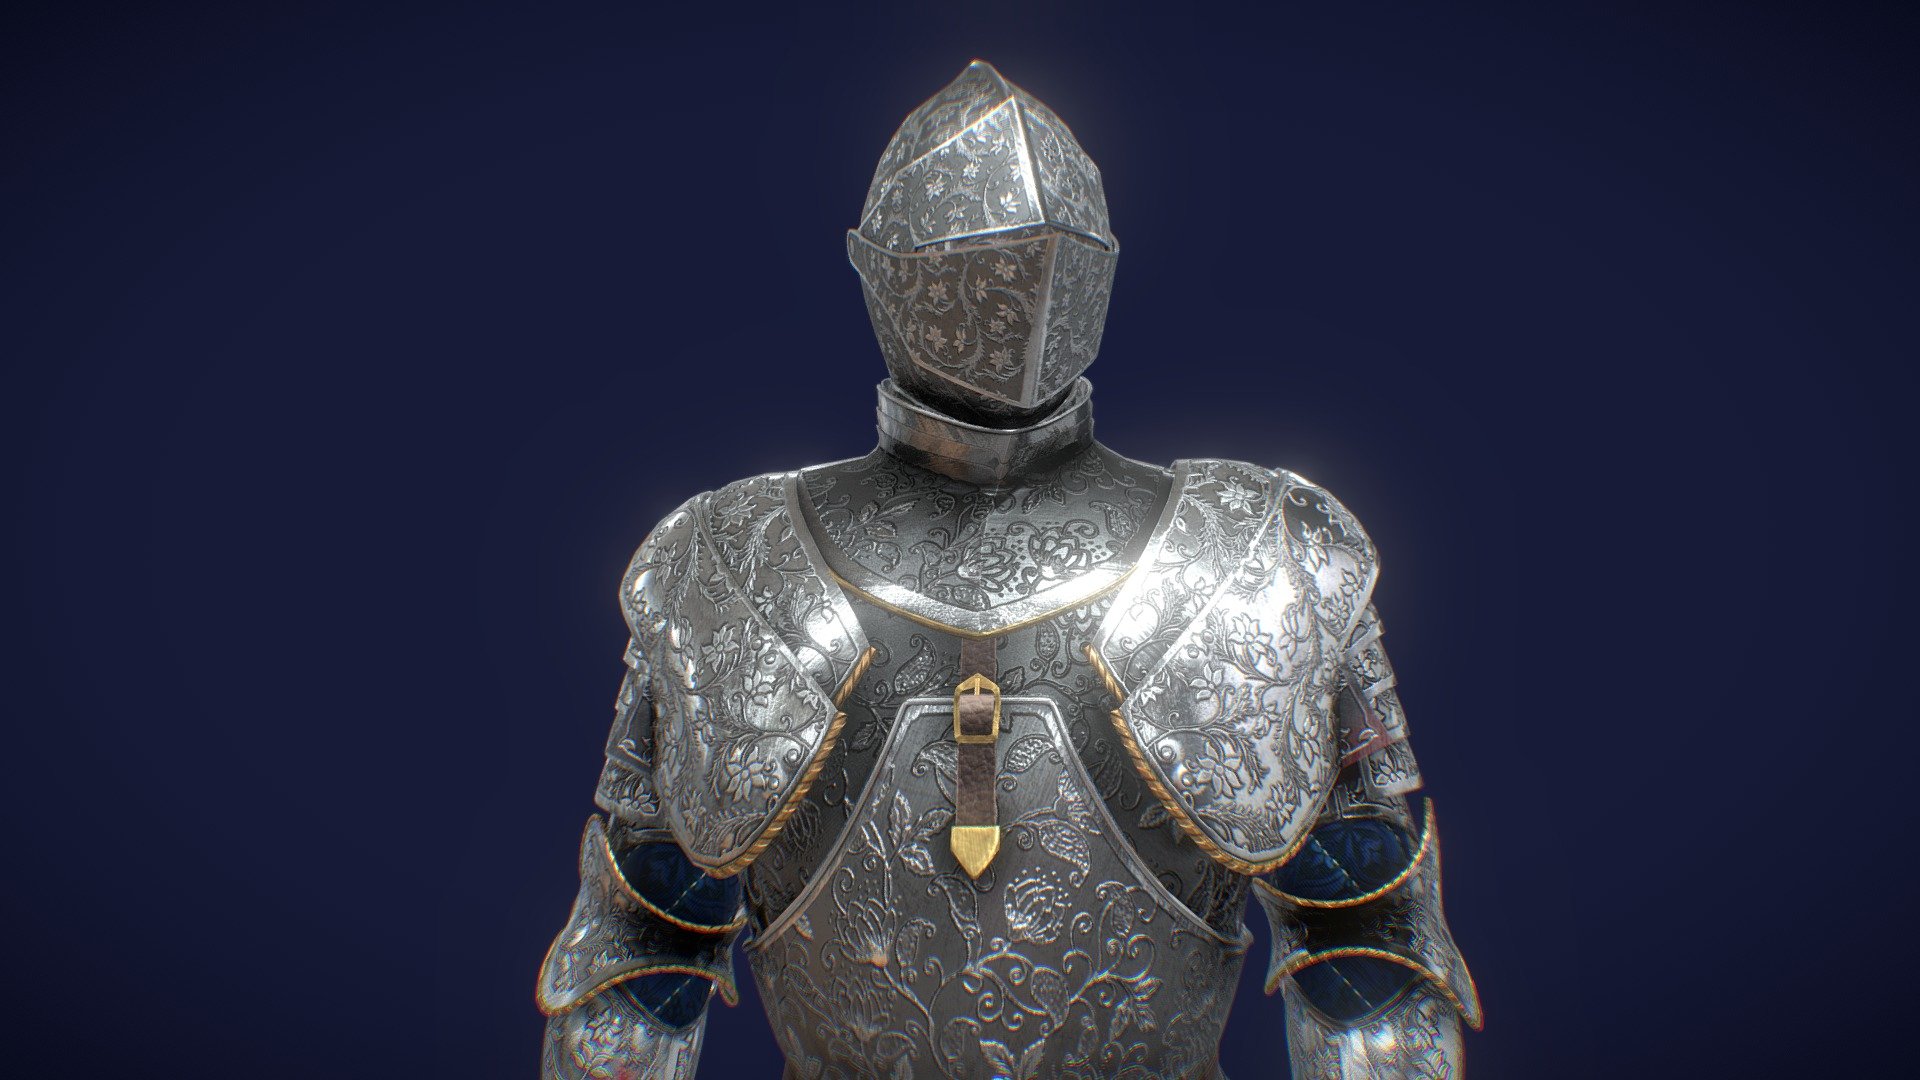 more renders at https://www.artstation.com/artwork/6b18A5
made in blender 3.1 - Armored knight - 3D model by ArtLeaving (@aptyphawk22) 3d model